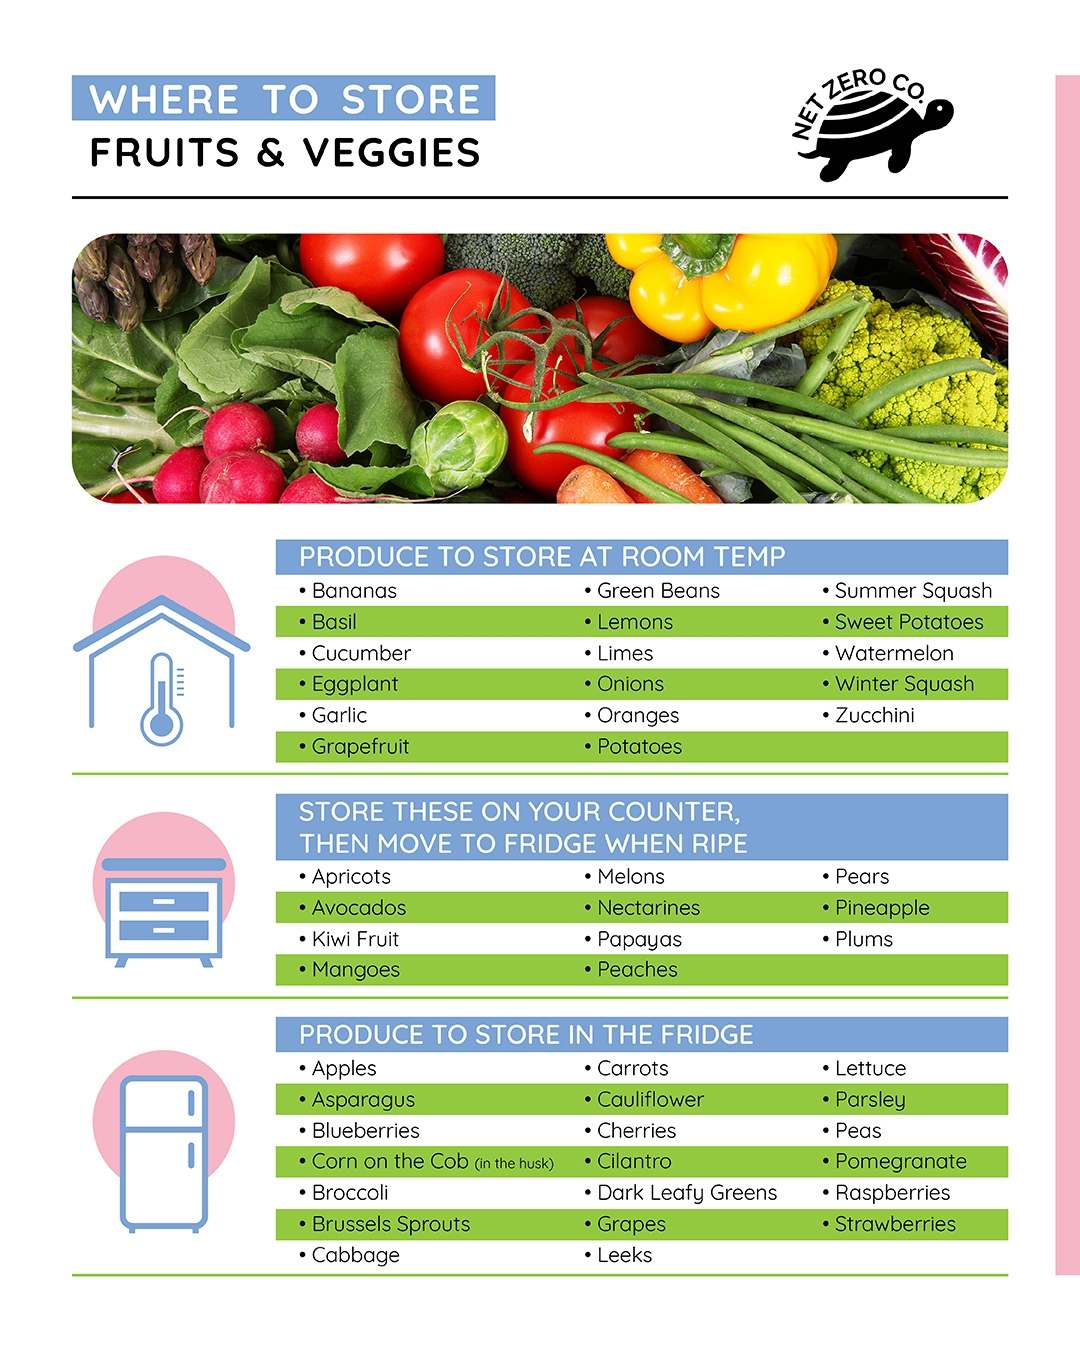 Where to Store Fruits and Veggies